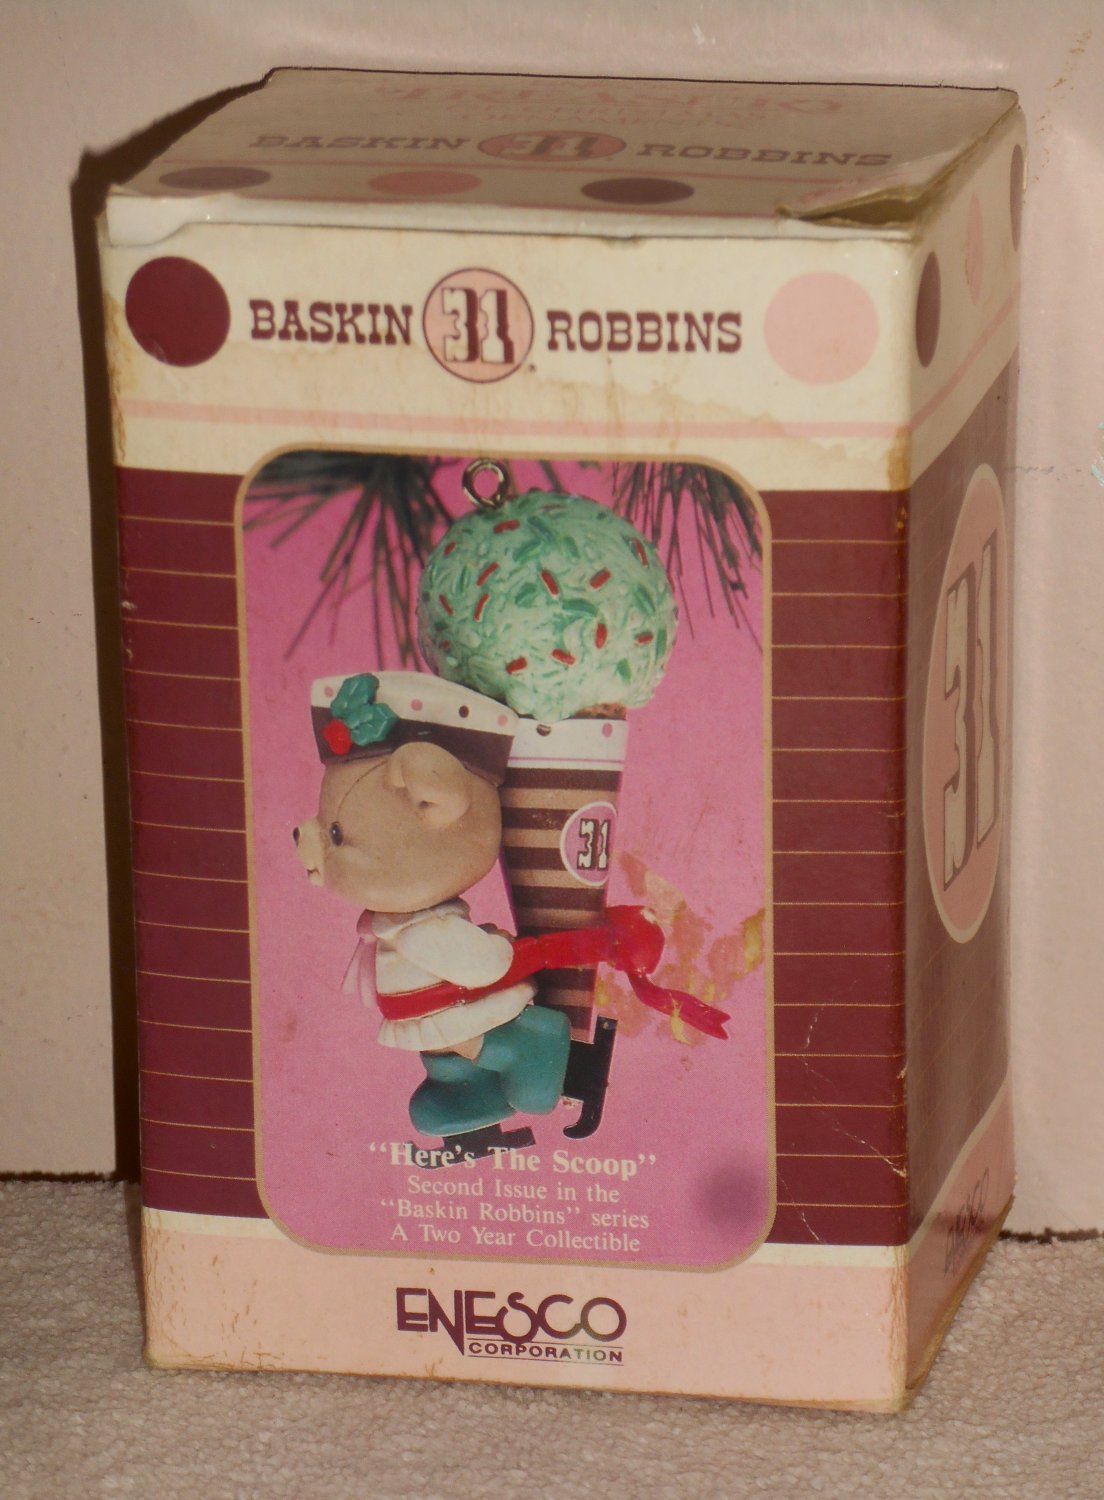 Baskin Robbins 31 Flavors Here's The Scoop Holiday Christmas Ornament Teddy Bear 1991 Enesco 583693